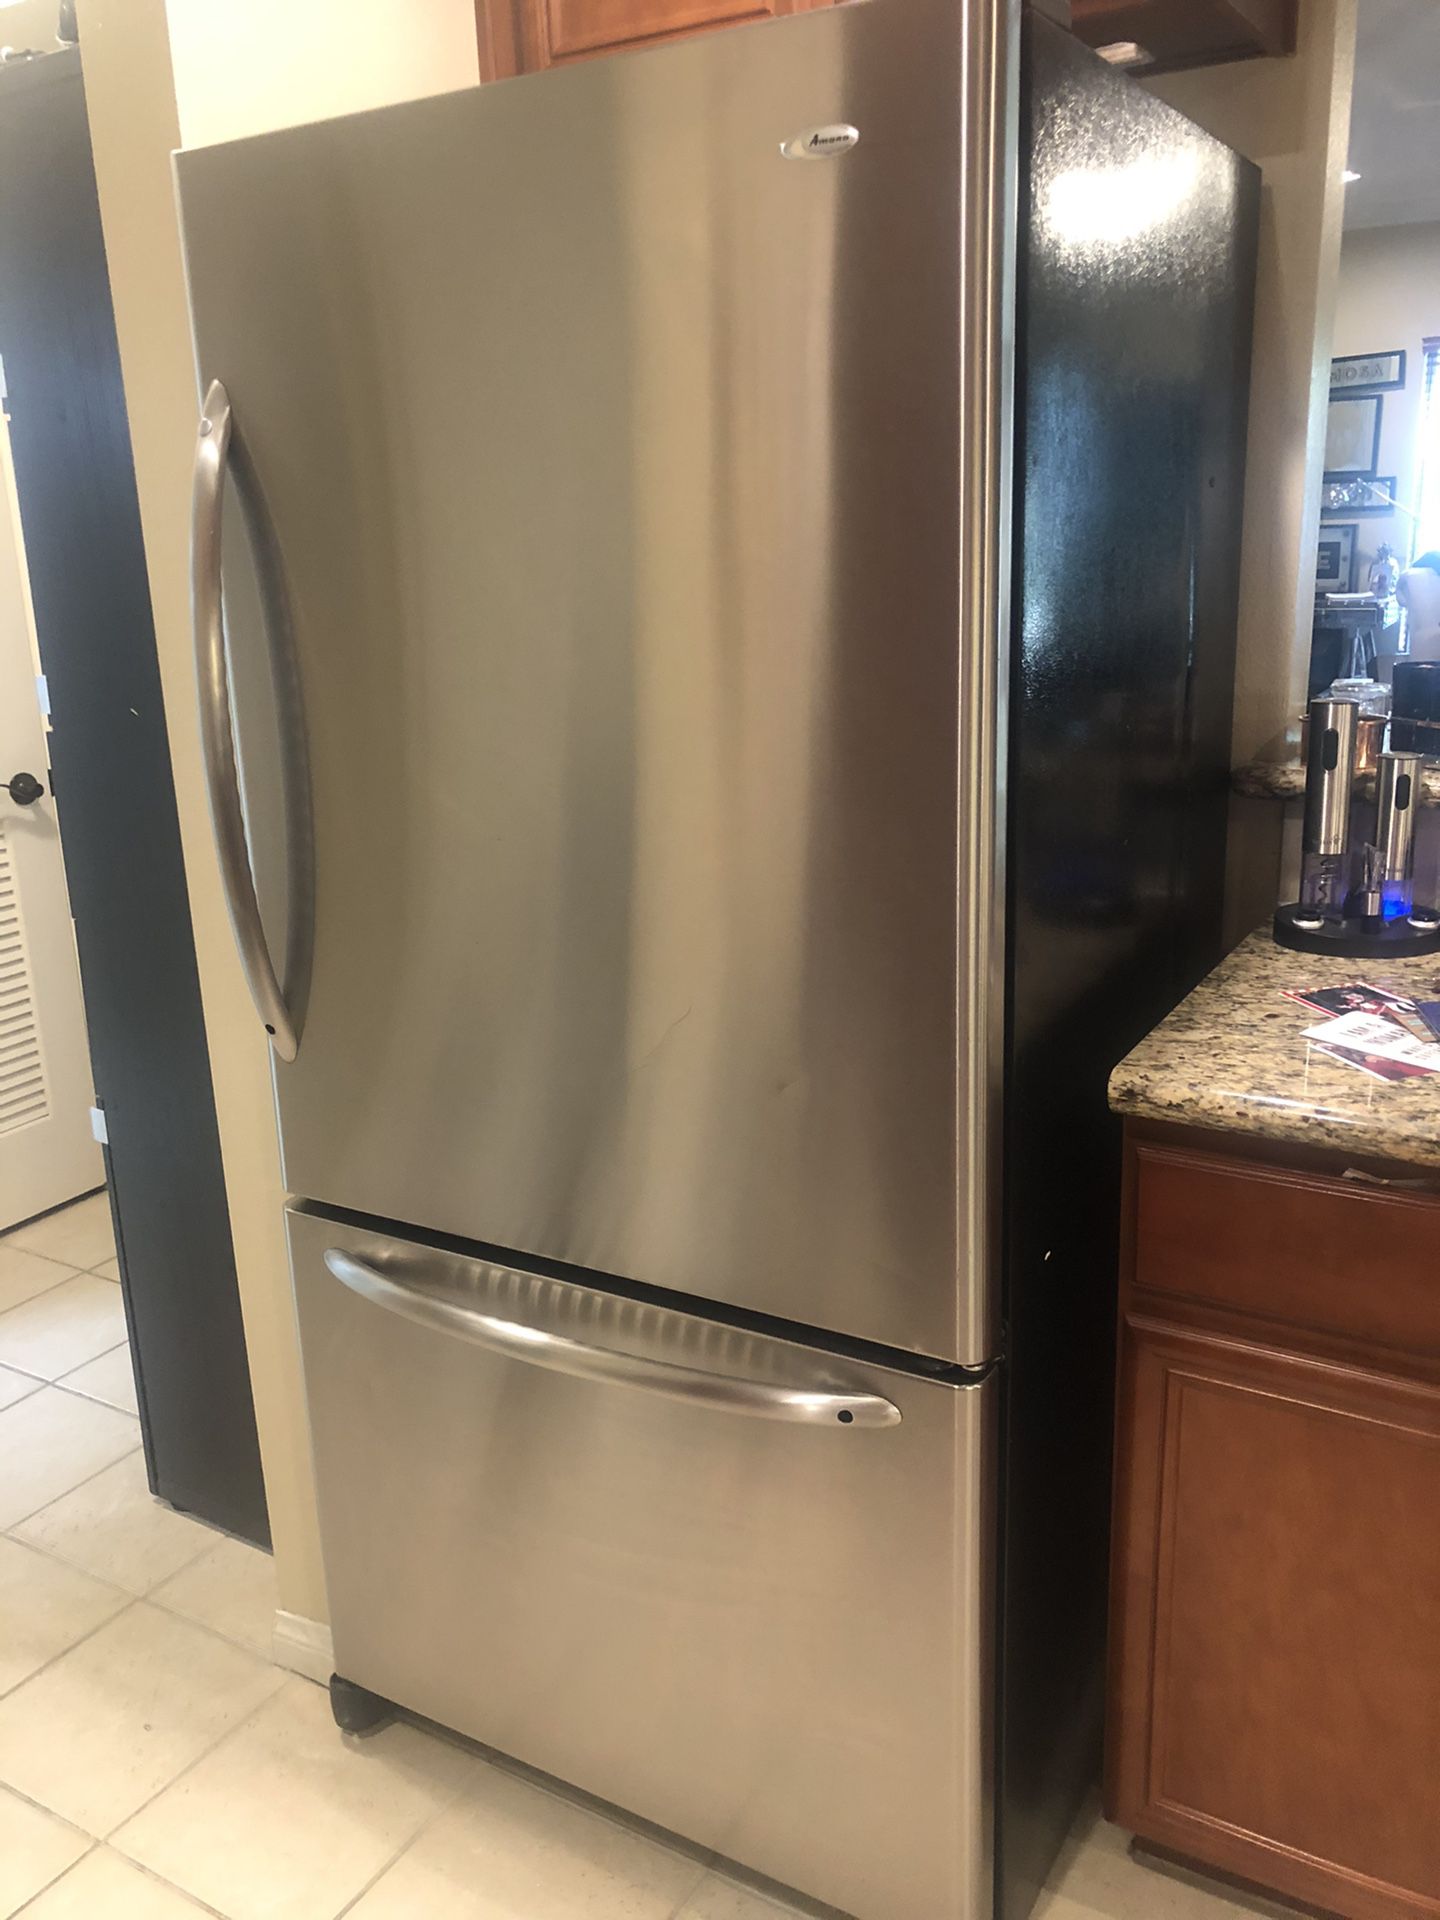 Amana Refrigerator-Apartment Size!